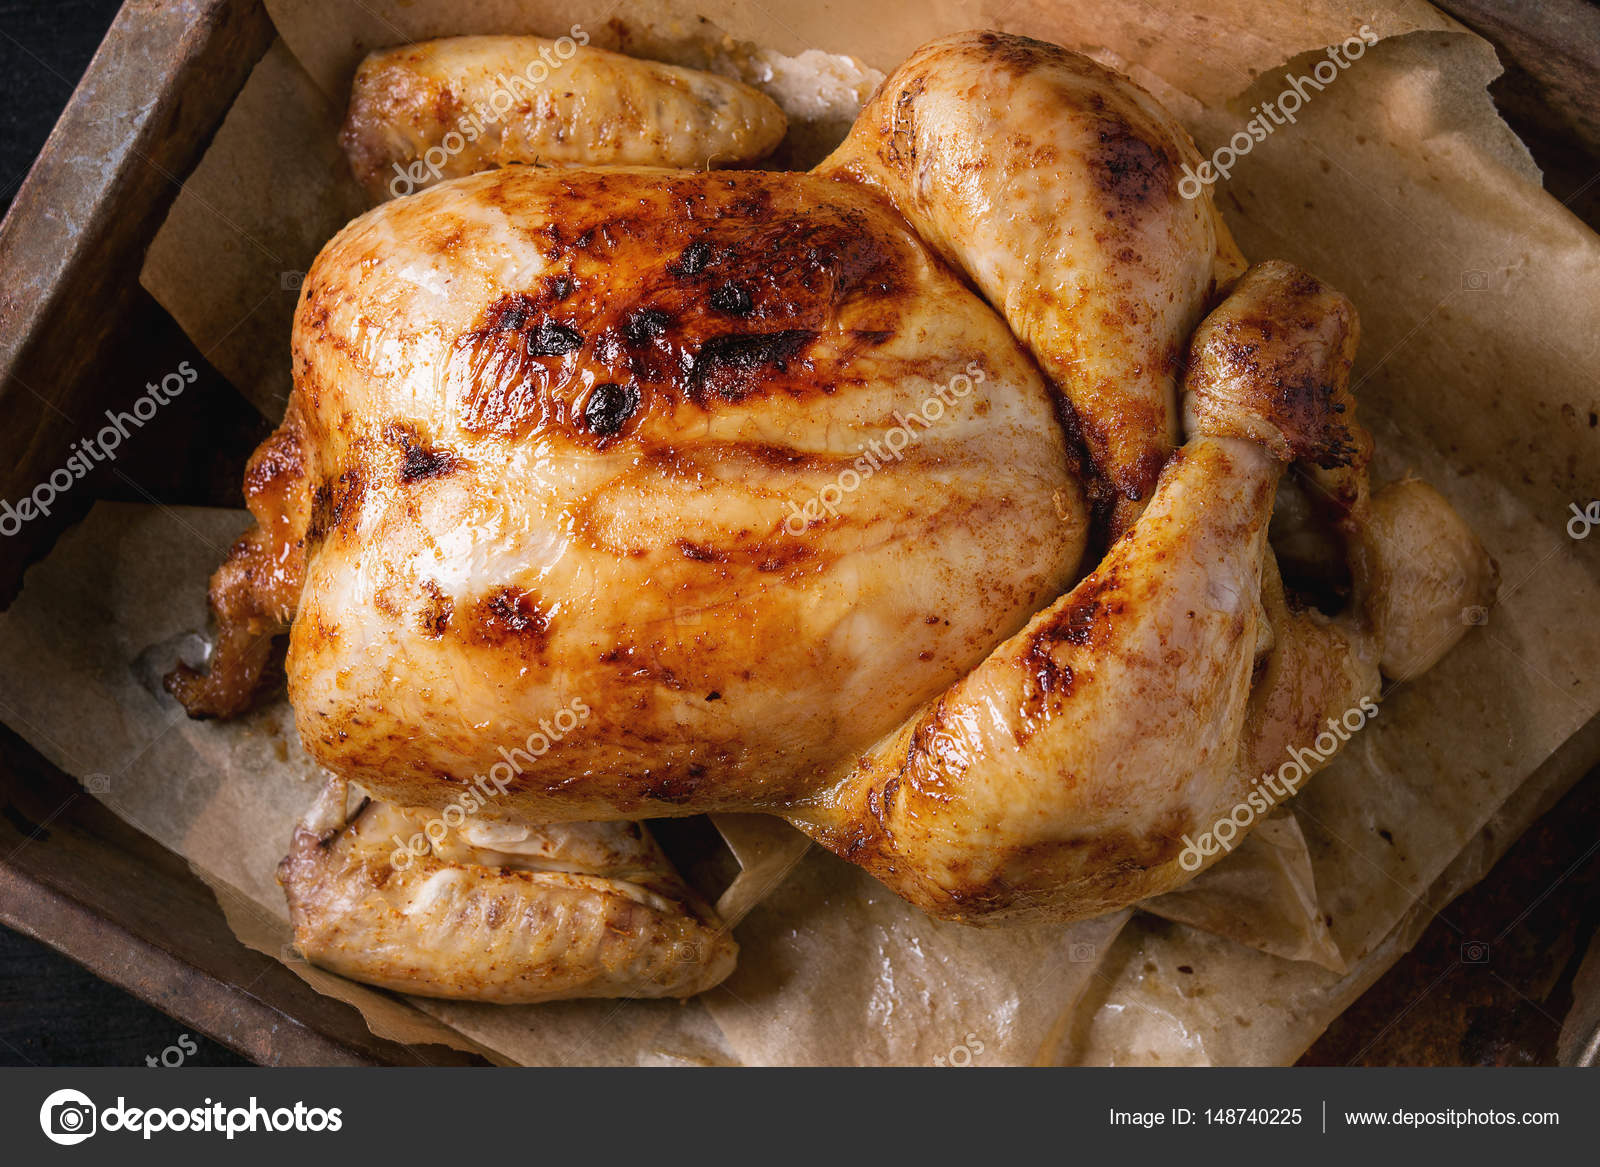 https://st3.depositphotos.com/2036925/14874/i/1600/depositphotos_148740225-stock-photo-grilled-whole-organic-chicken.jpg